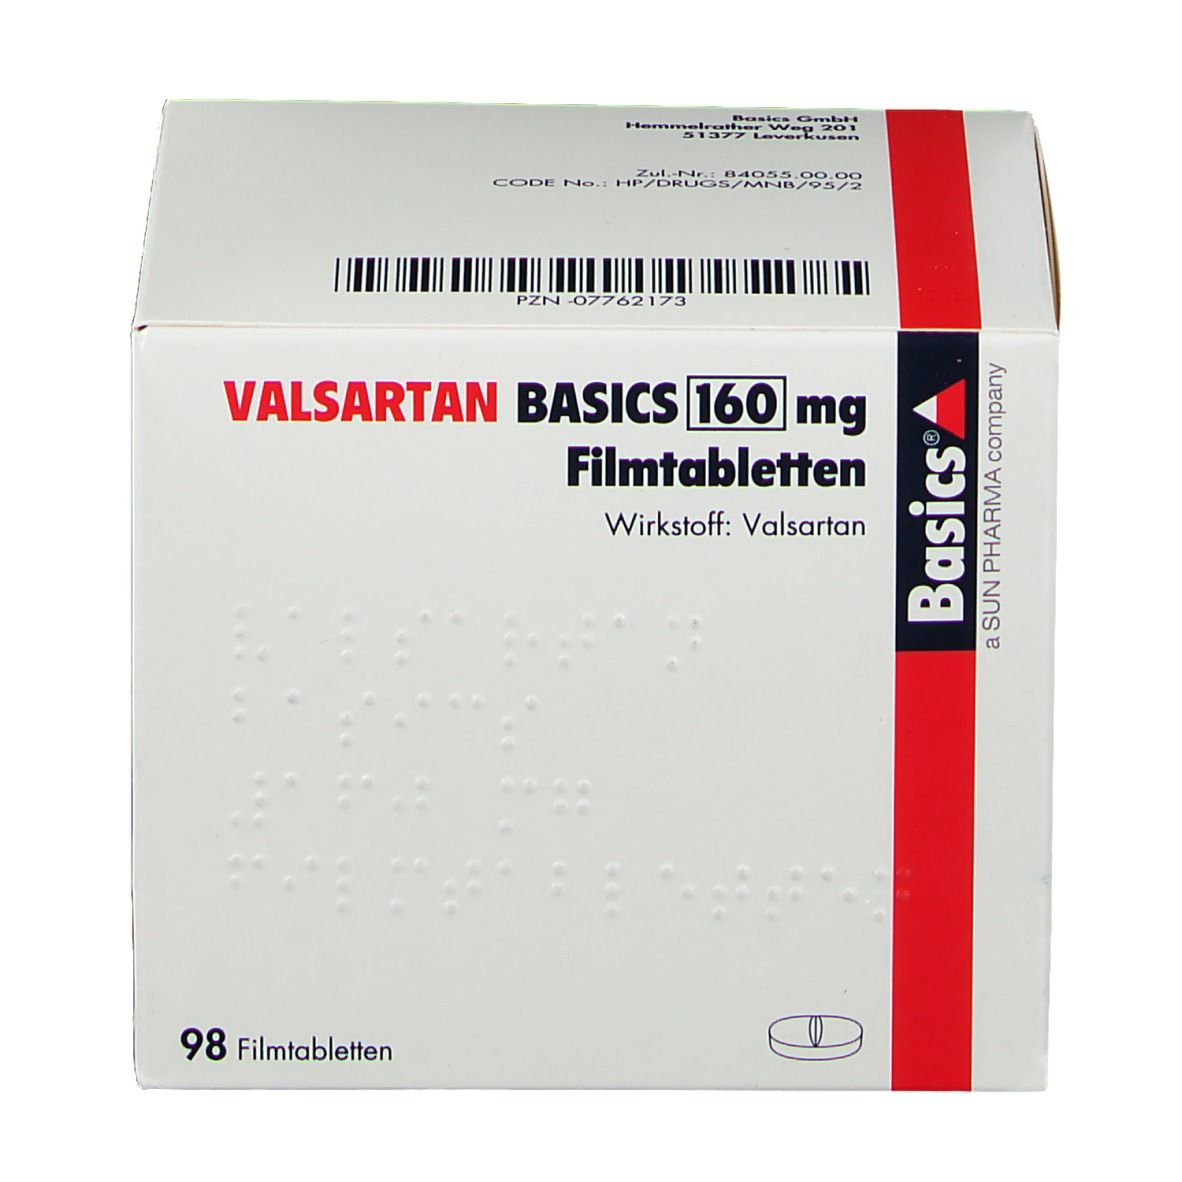 VALSARTAN BASICS 160 mg